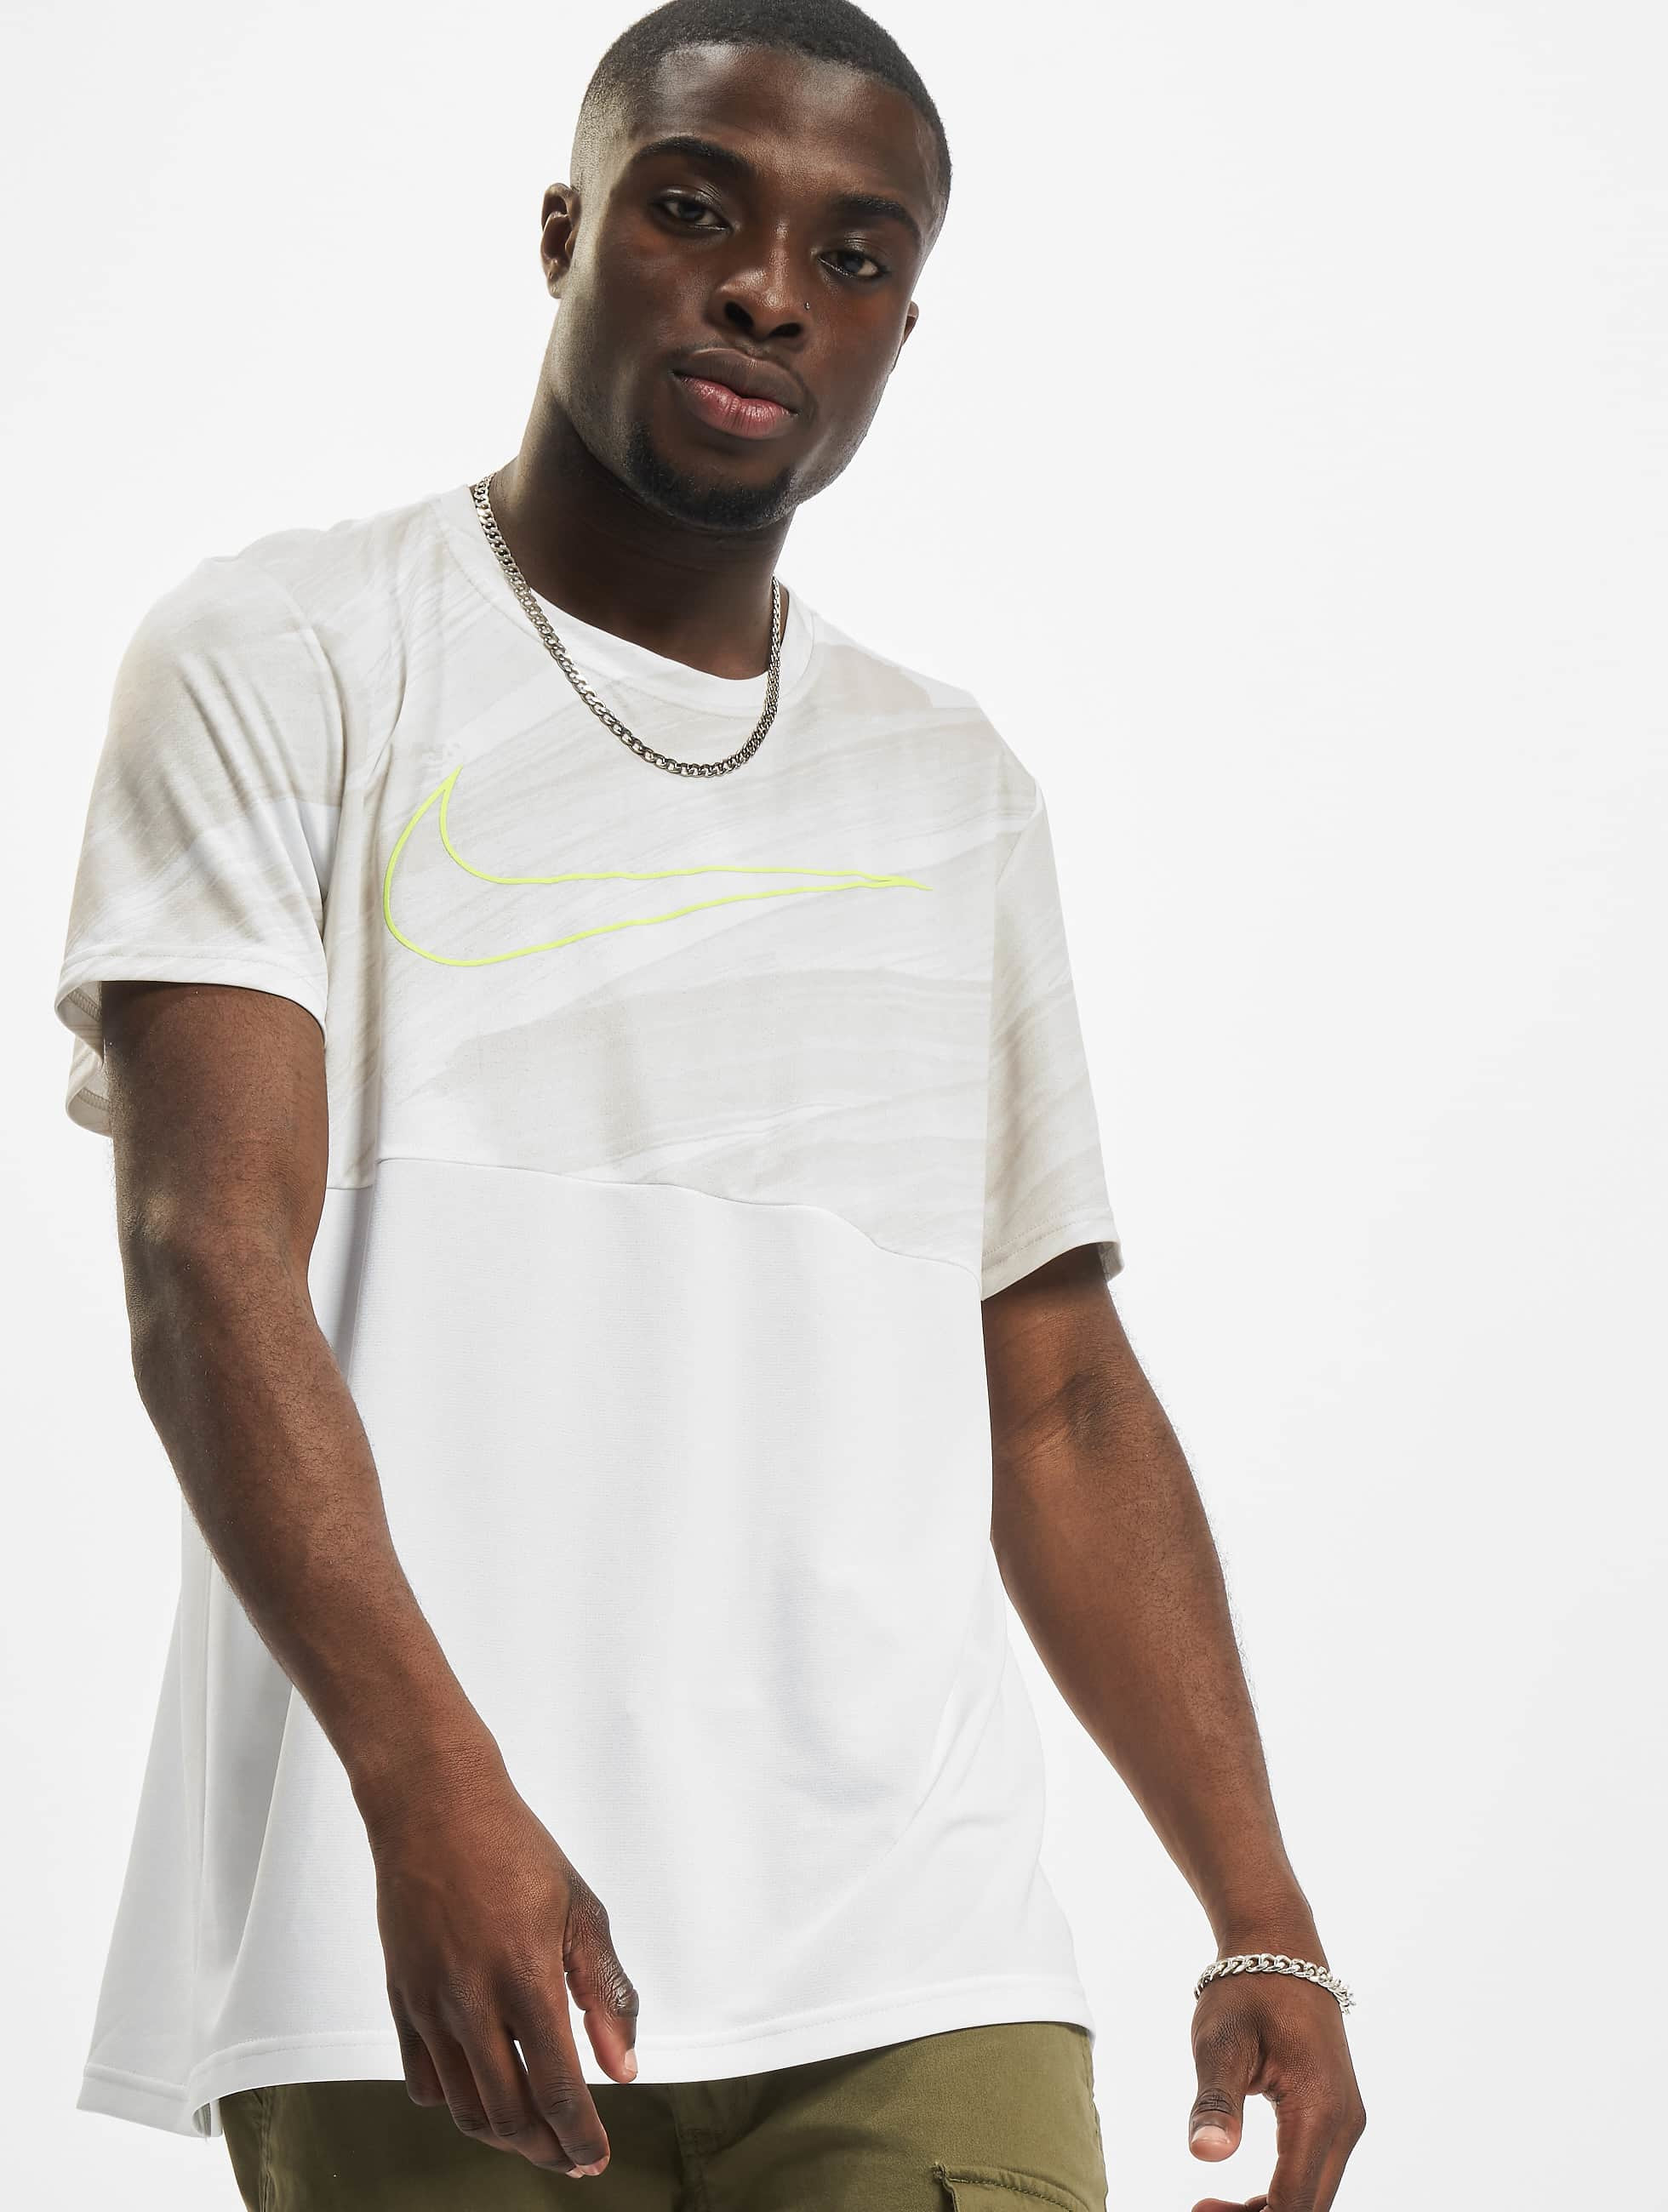 Omgeving spreker donor Nike Performance bovenstuk / t-shirt Superset Energy in wit 841088